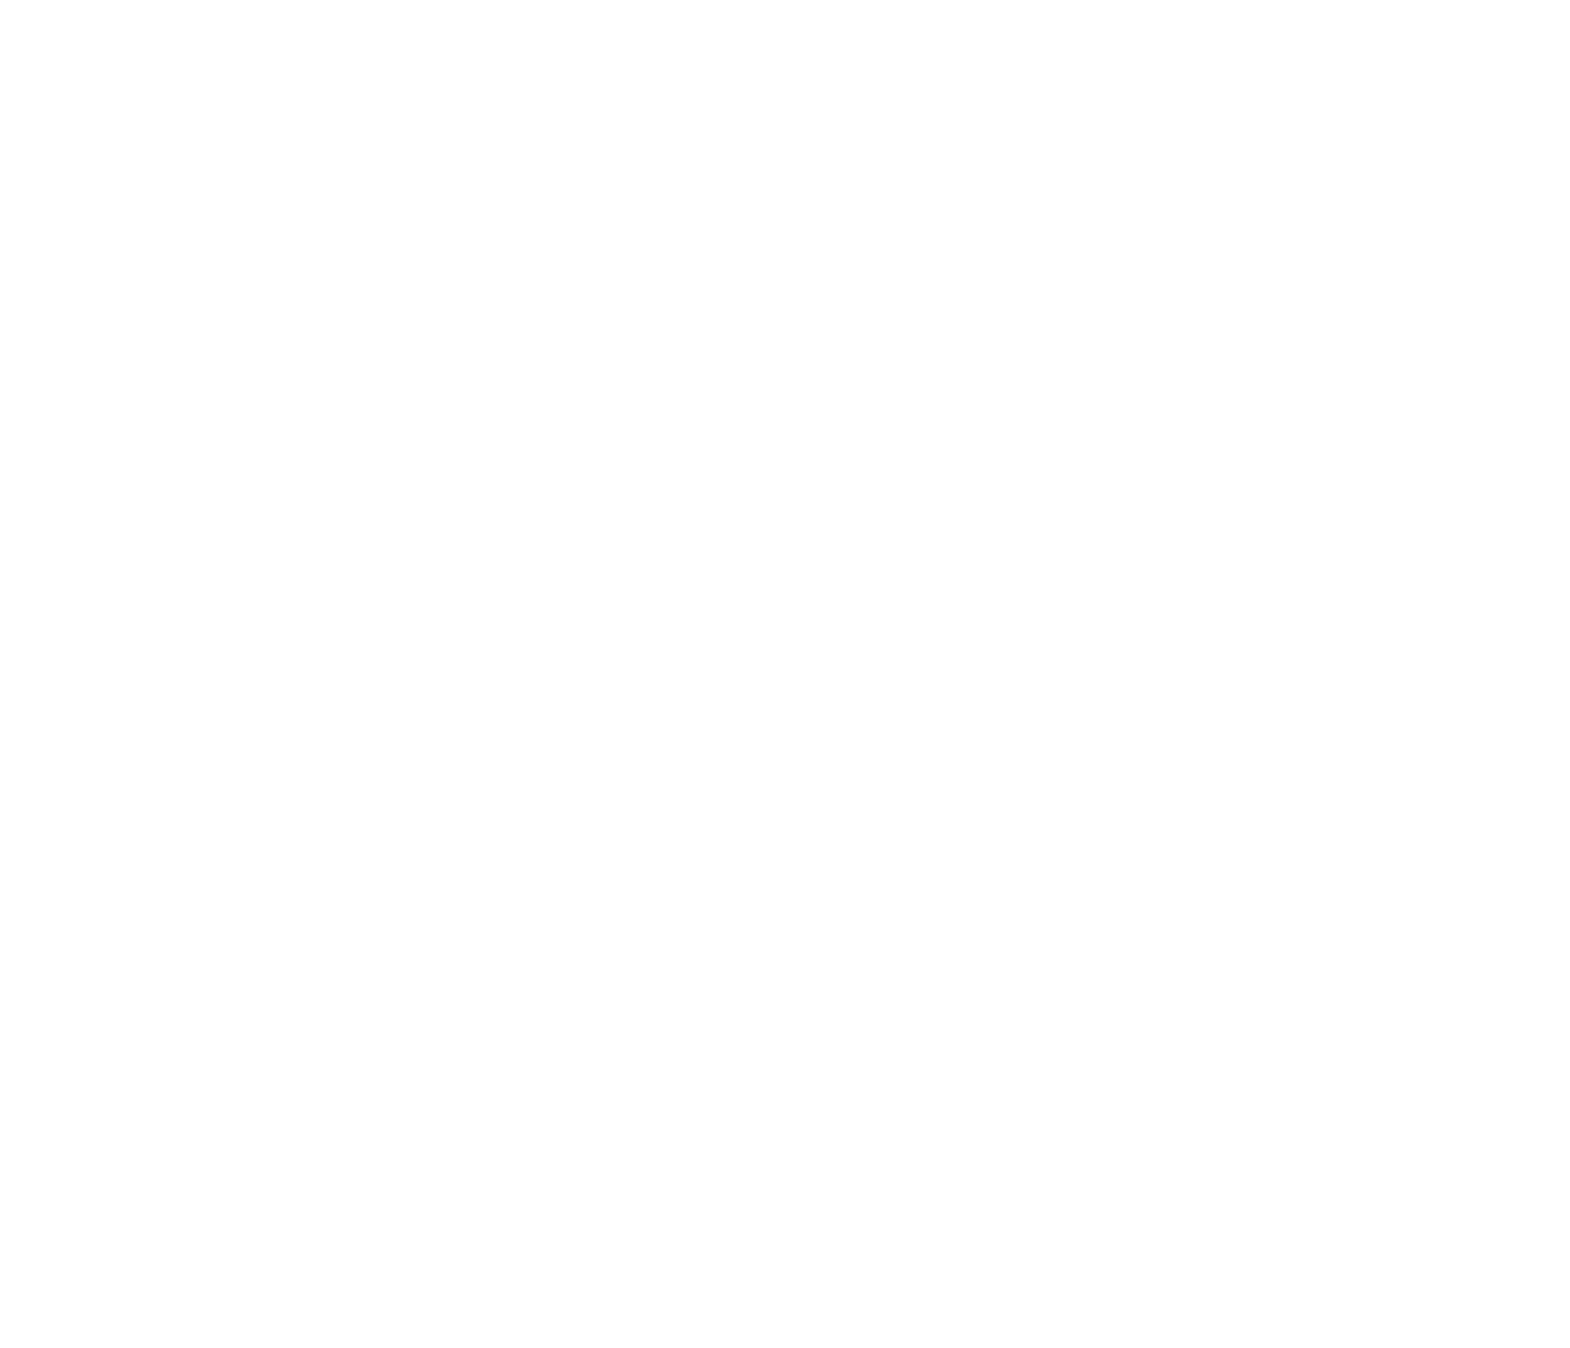 National Bank of Kuwait logo for dark backgrounds (transparent PNG)